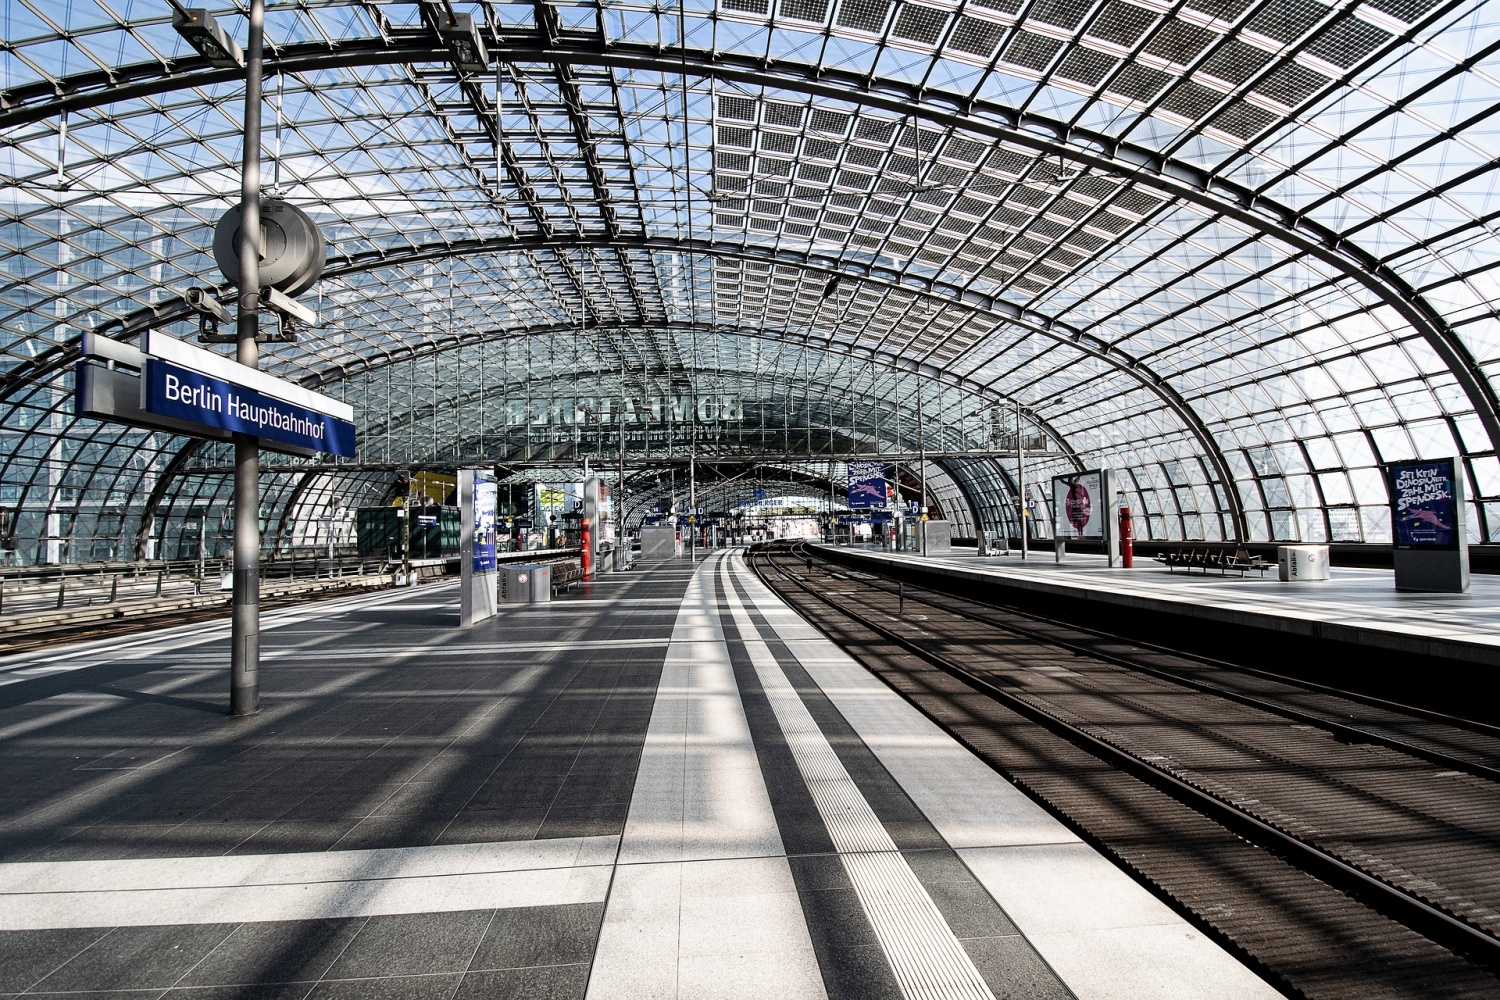 Swiss Startup Sun-Ways Introduces World's First Solar Panel Carpet for Railway Tracks